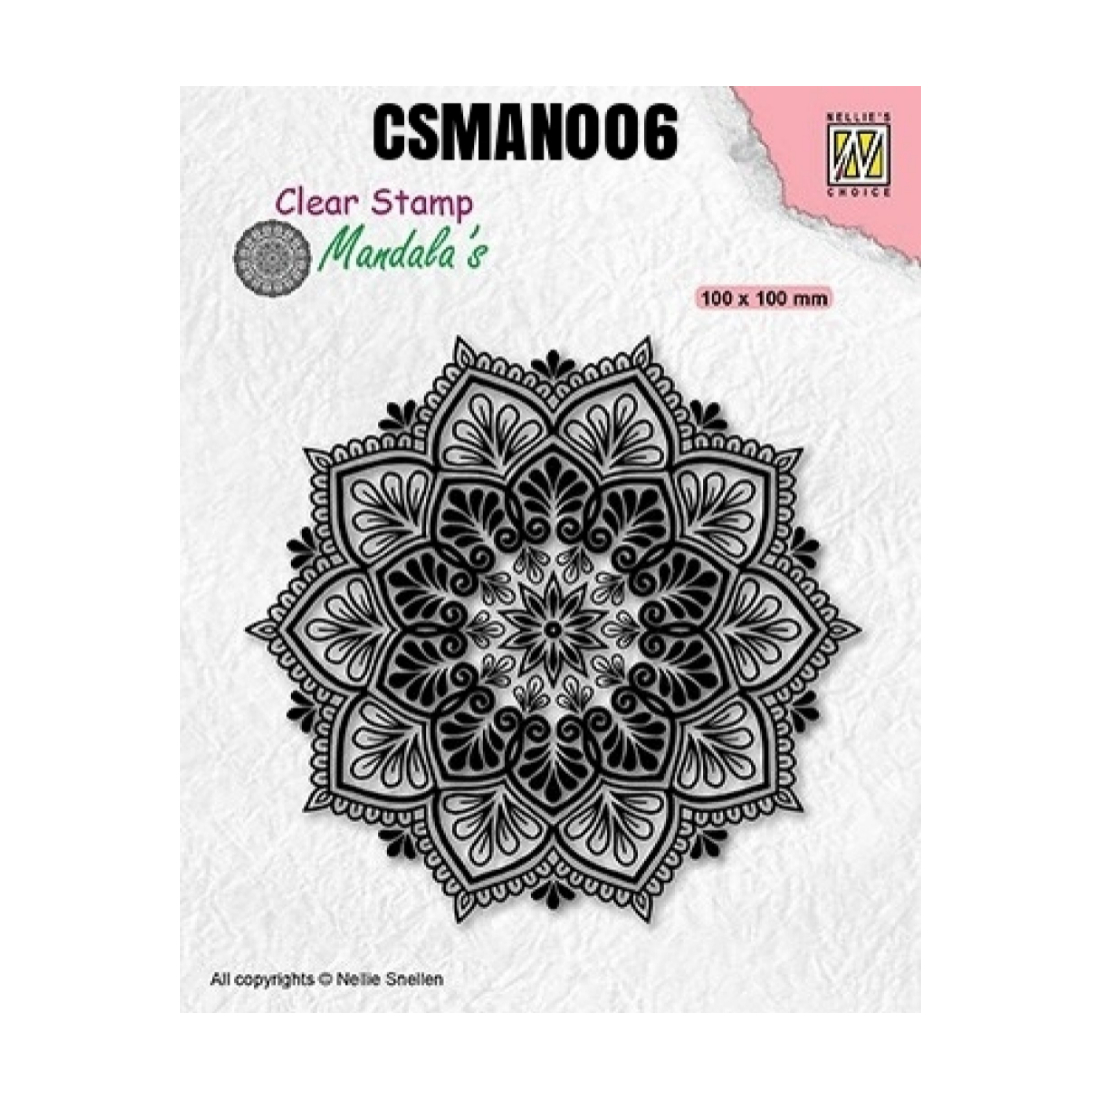 Carimbo Mandala Star Flower CSMAN006 nellie`s choise